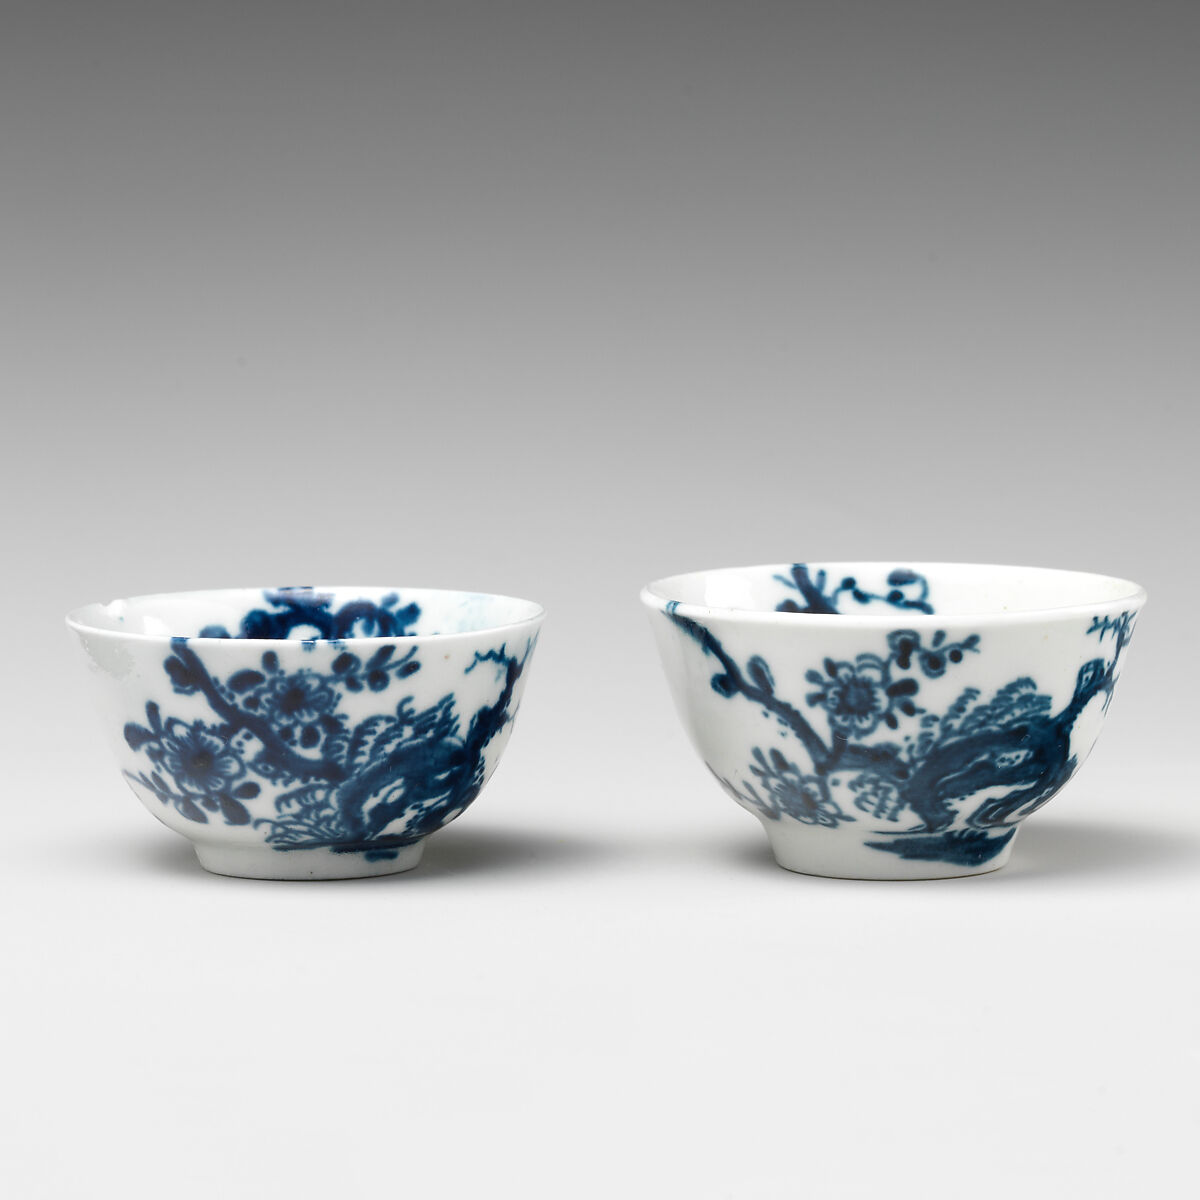 Two miniature bowls (part of a service), Worcester factory (British, 1751–2008), Soft-paste porcelain with underglaze blue, British, Worcester 